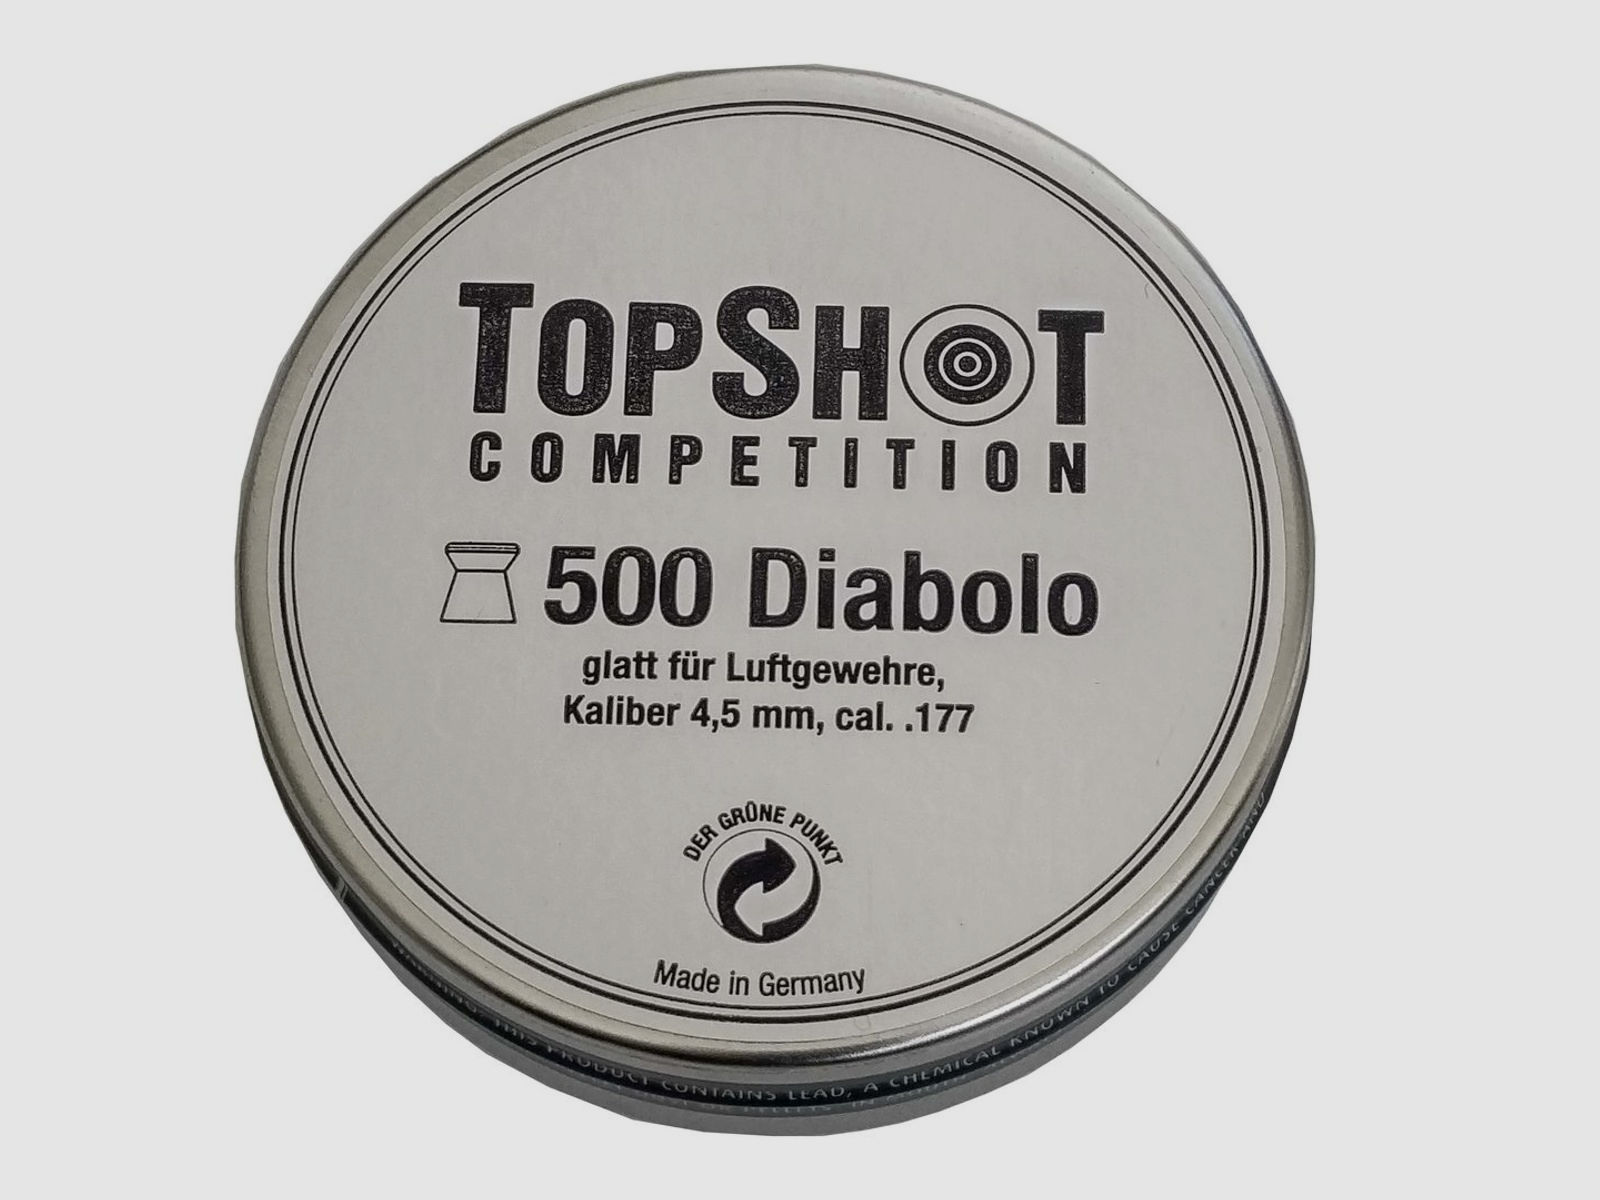 TOPSHOT Diabolo Competition glatt 4,5mm